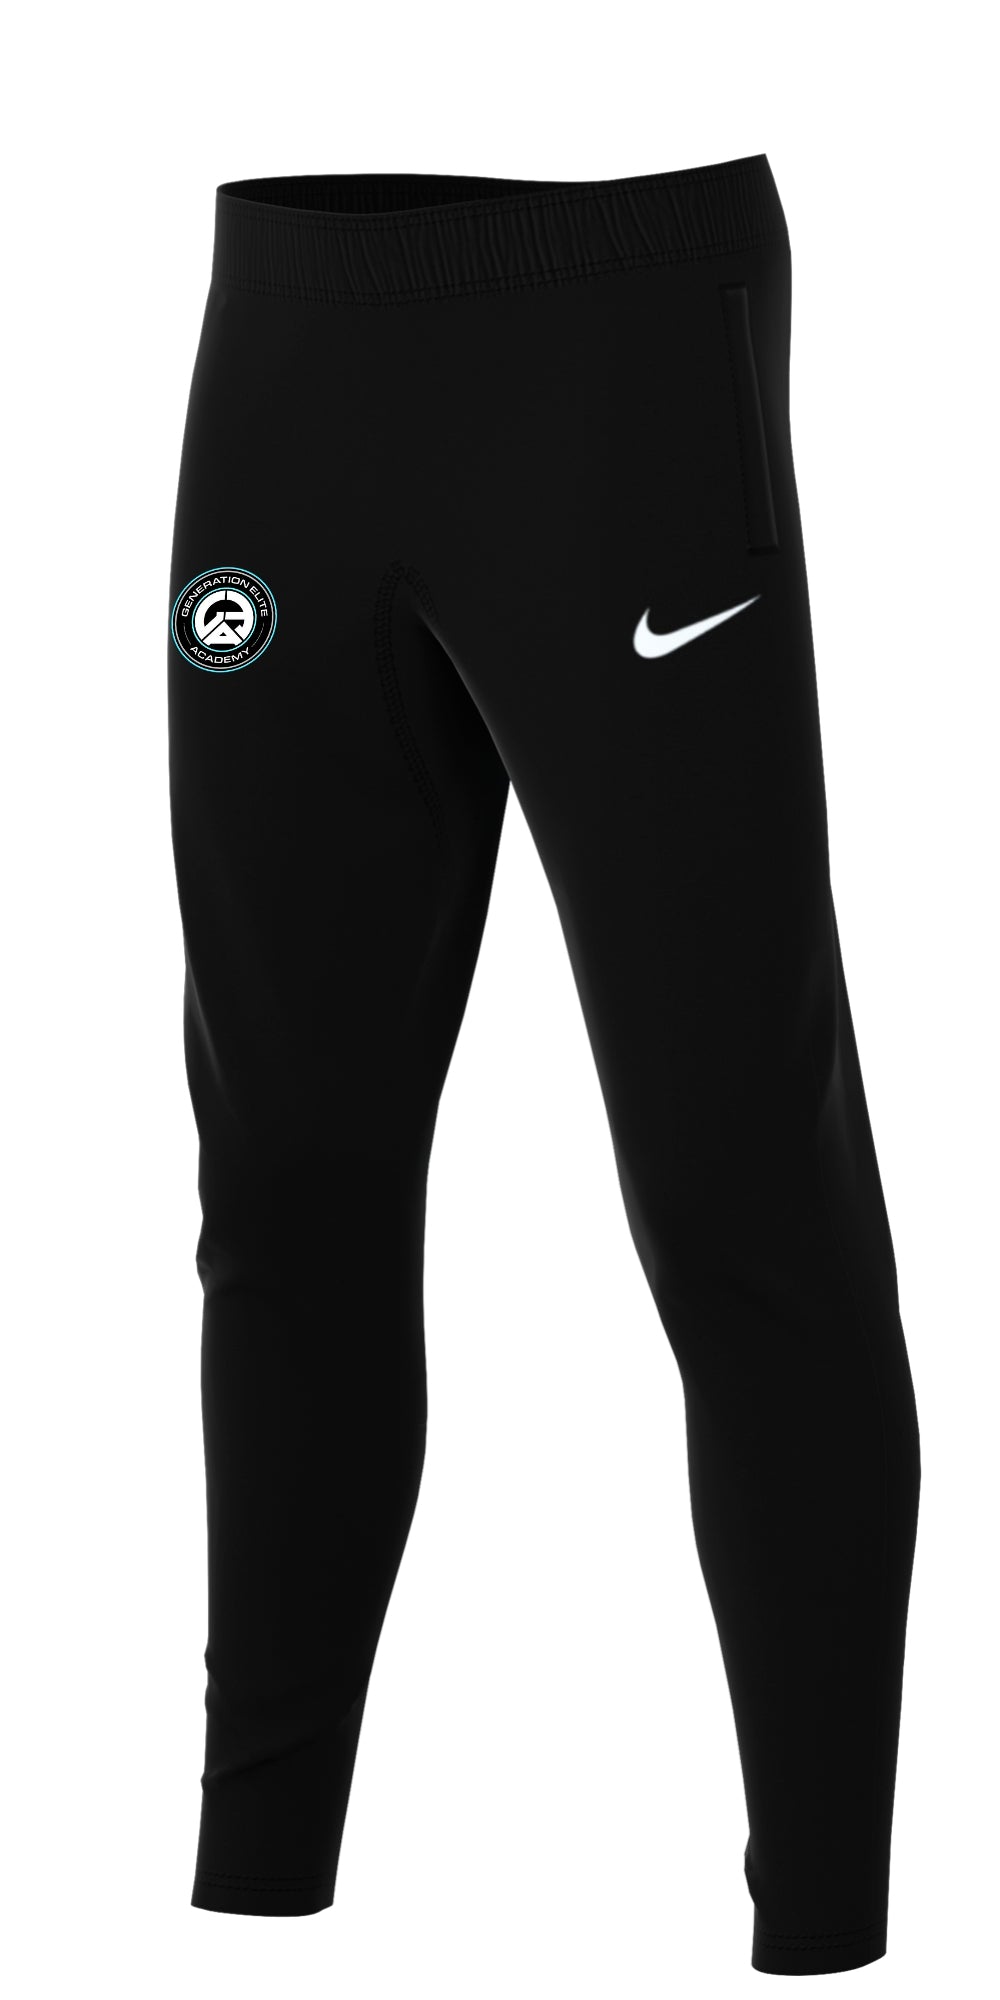 GEA - Nike Academy Pro Pant 24 - Black